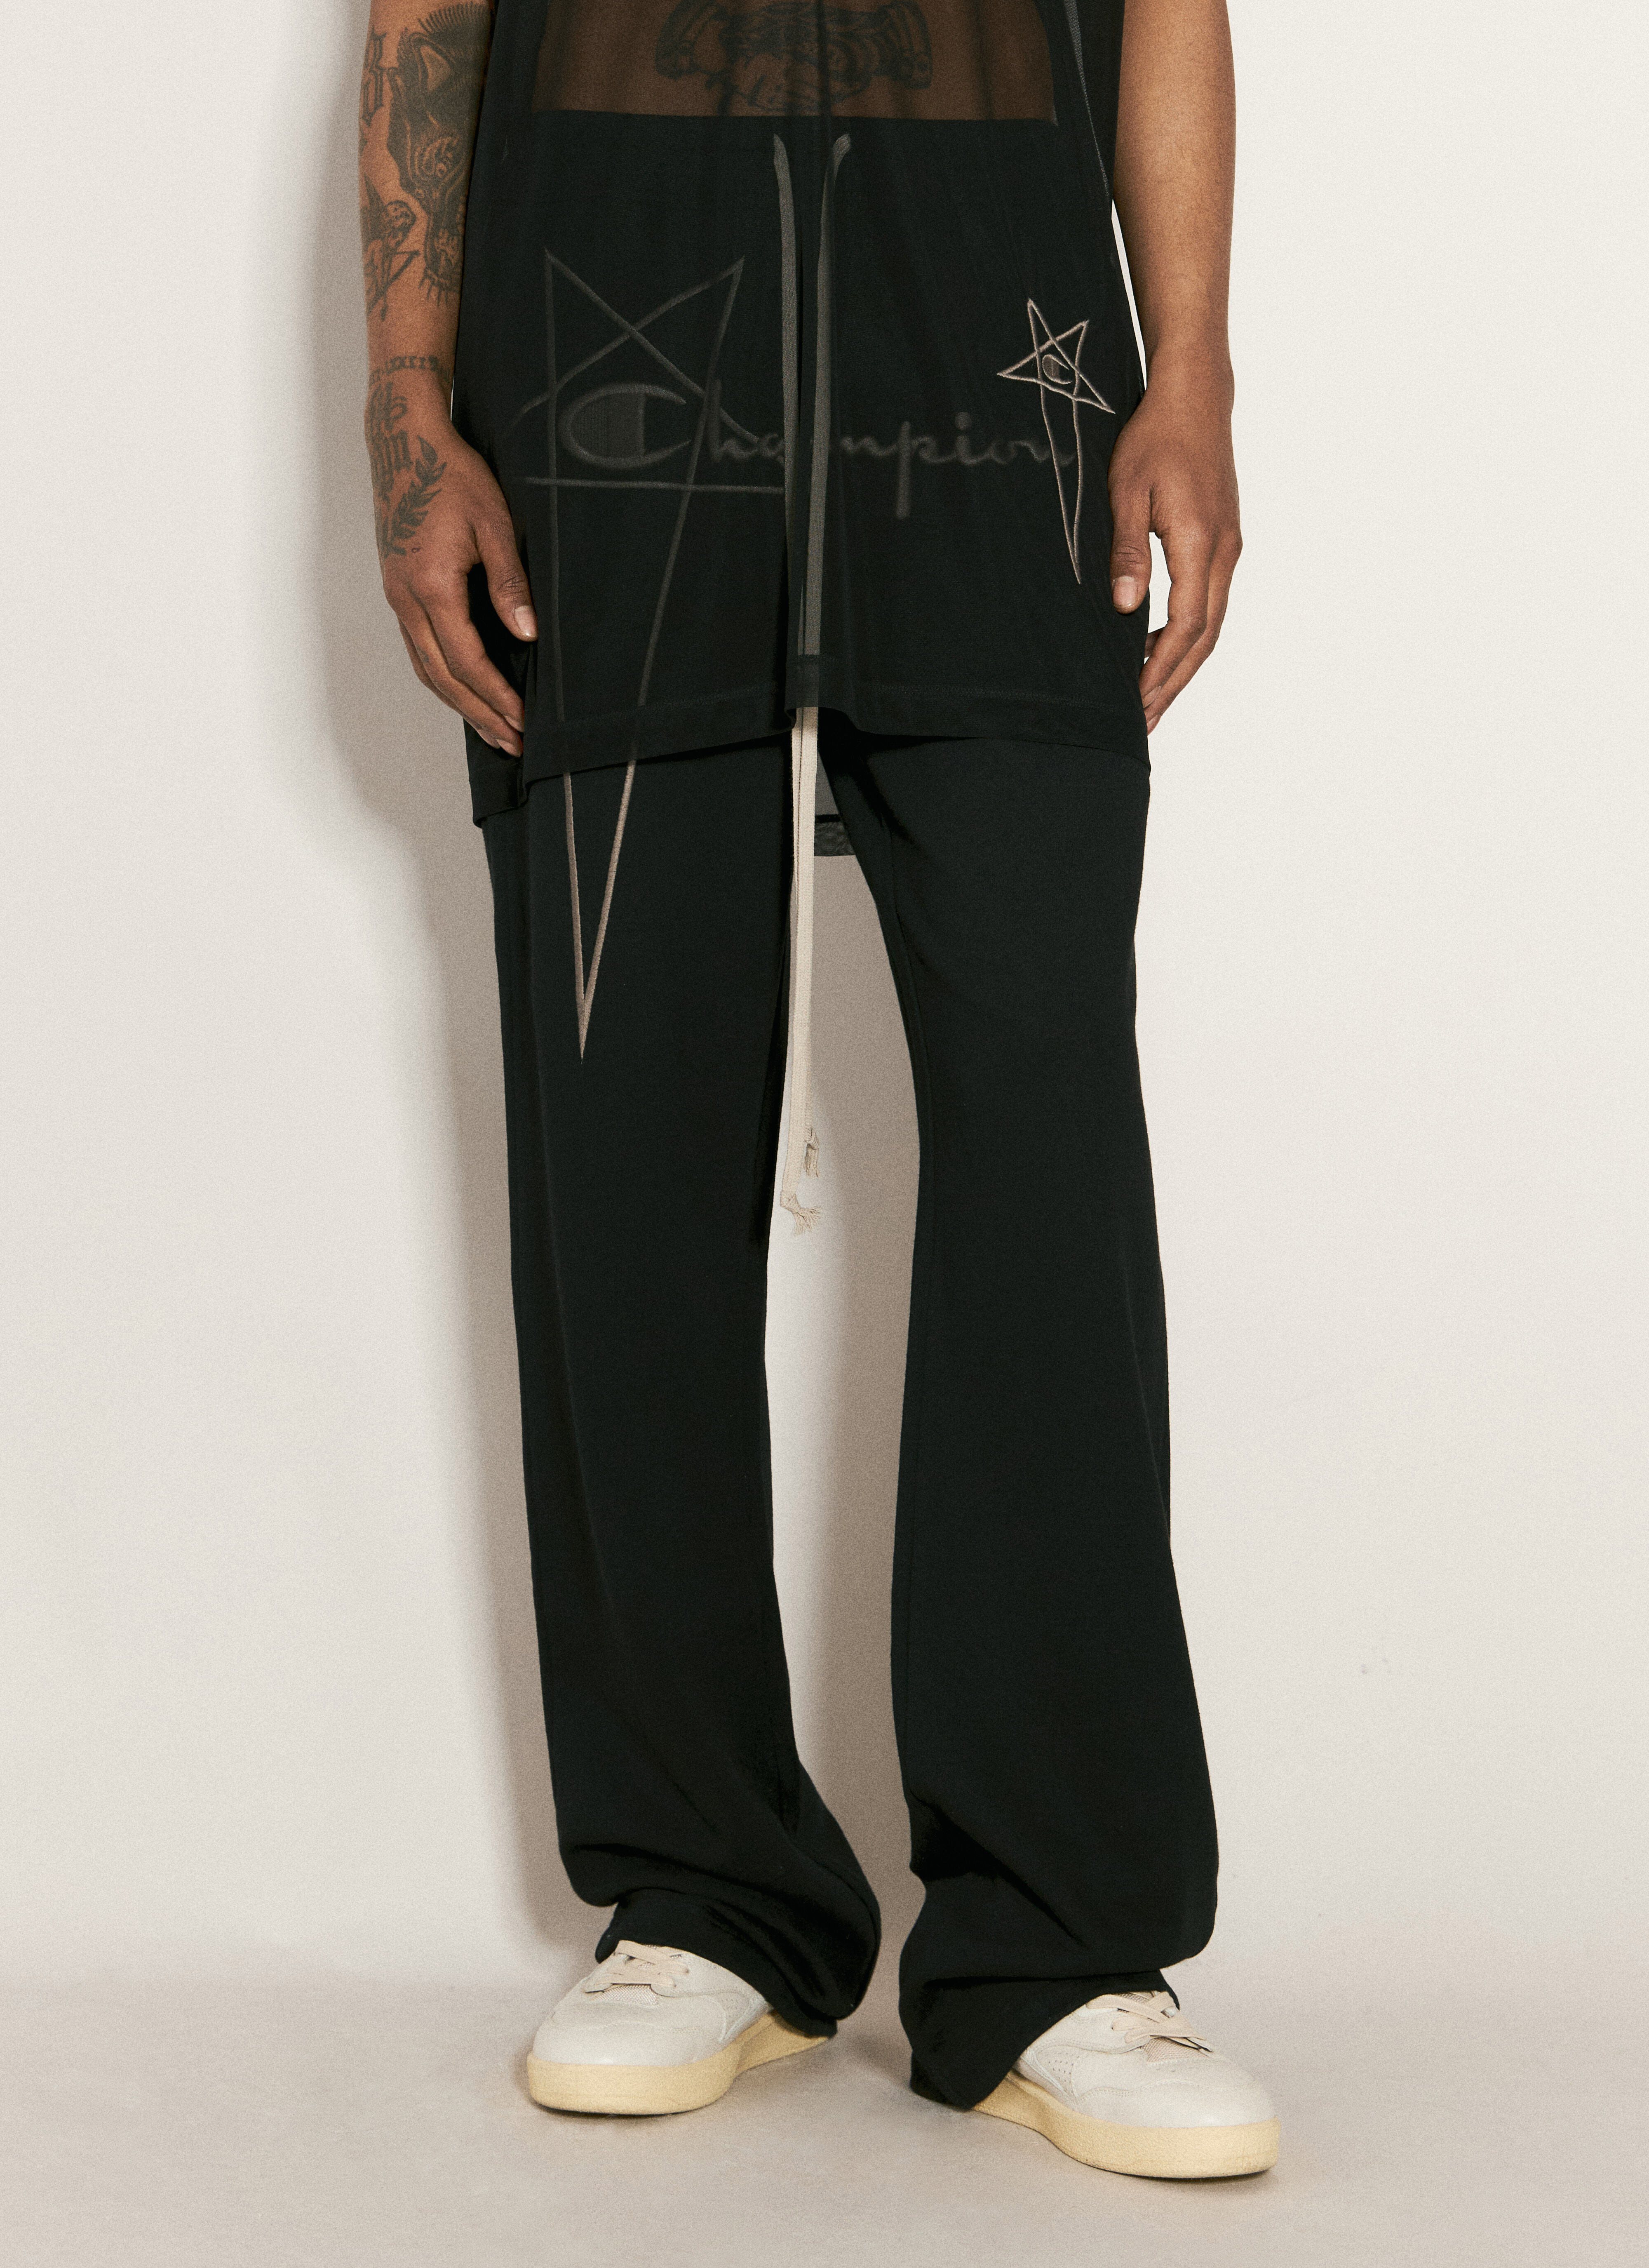 Rick Owens x Champion Dietrich Drawstring Track Pants Black roc0157004